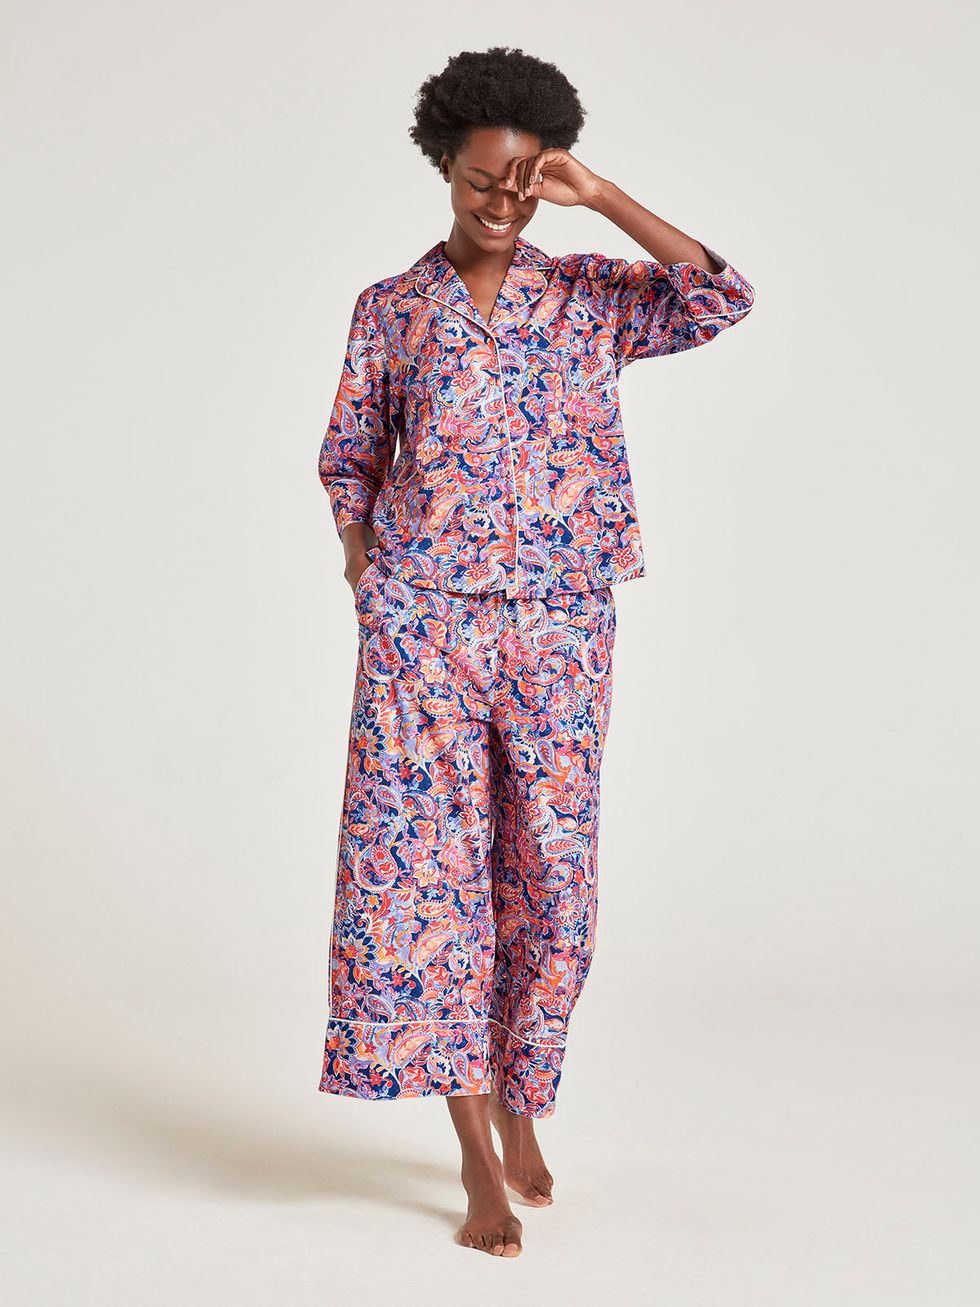 Ladies\' cotton cotton nights for pyjamas: Best great PJs a sleep